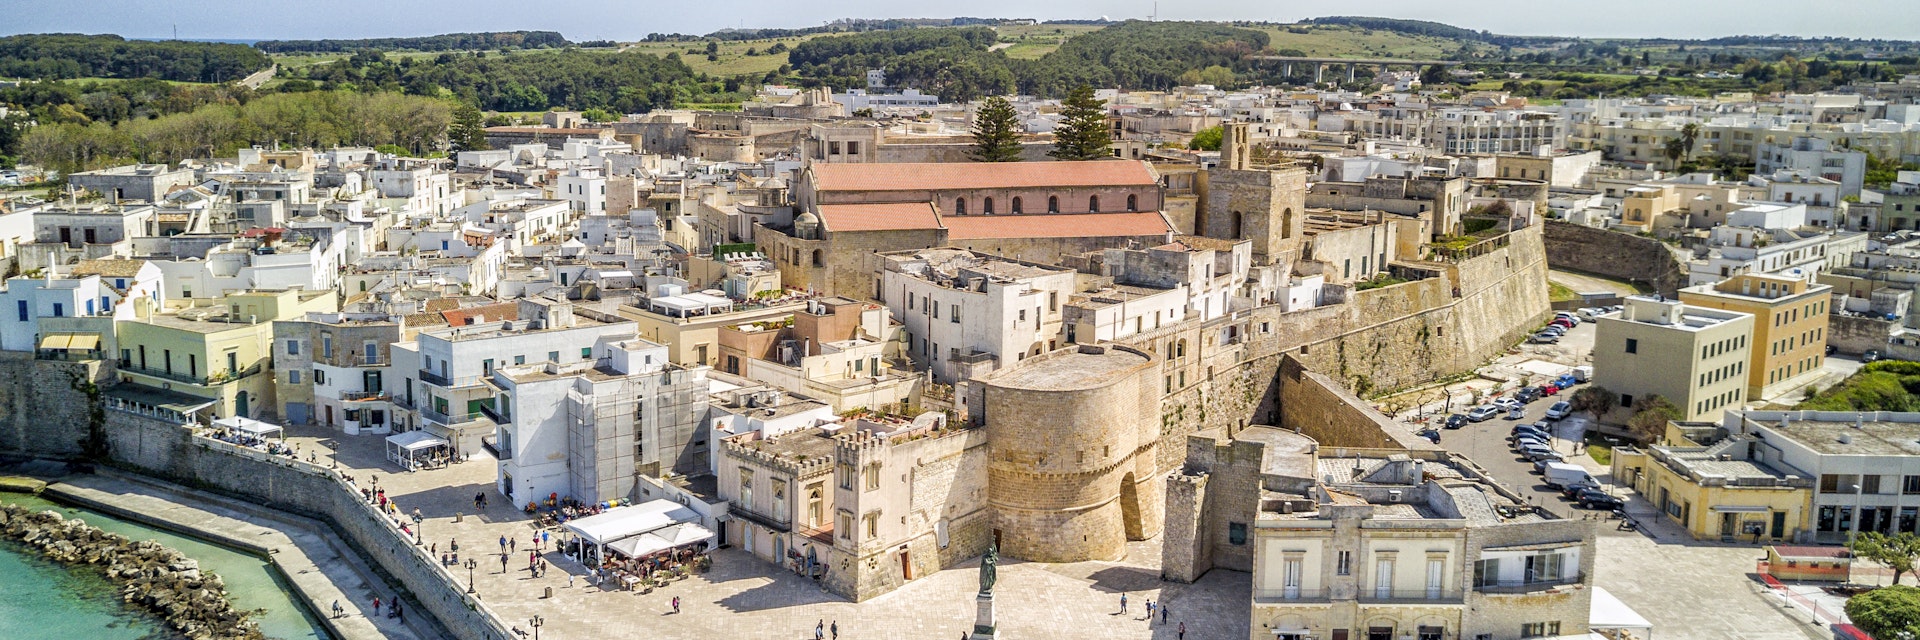 Otranto with historic Aragonese castle in the city center, Apulia, Italy